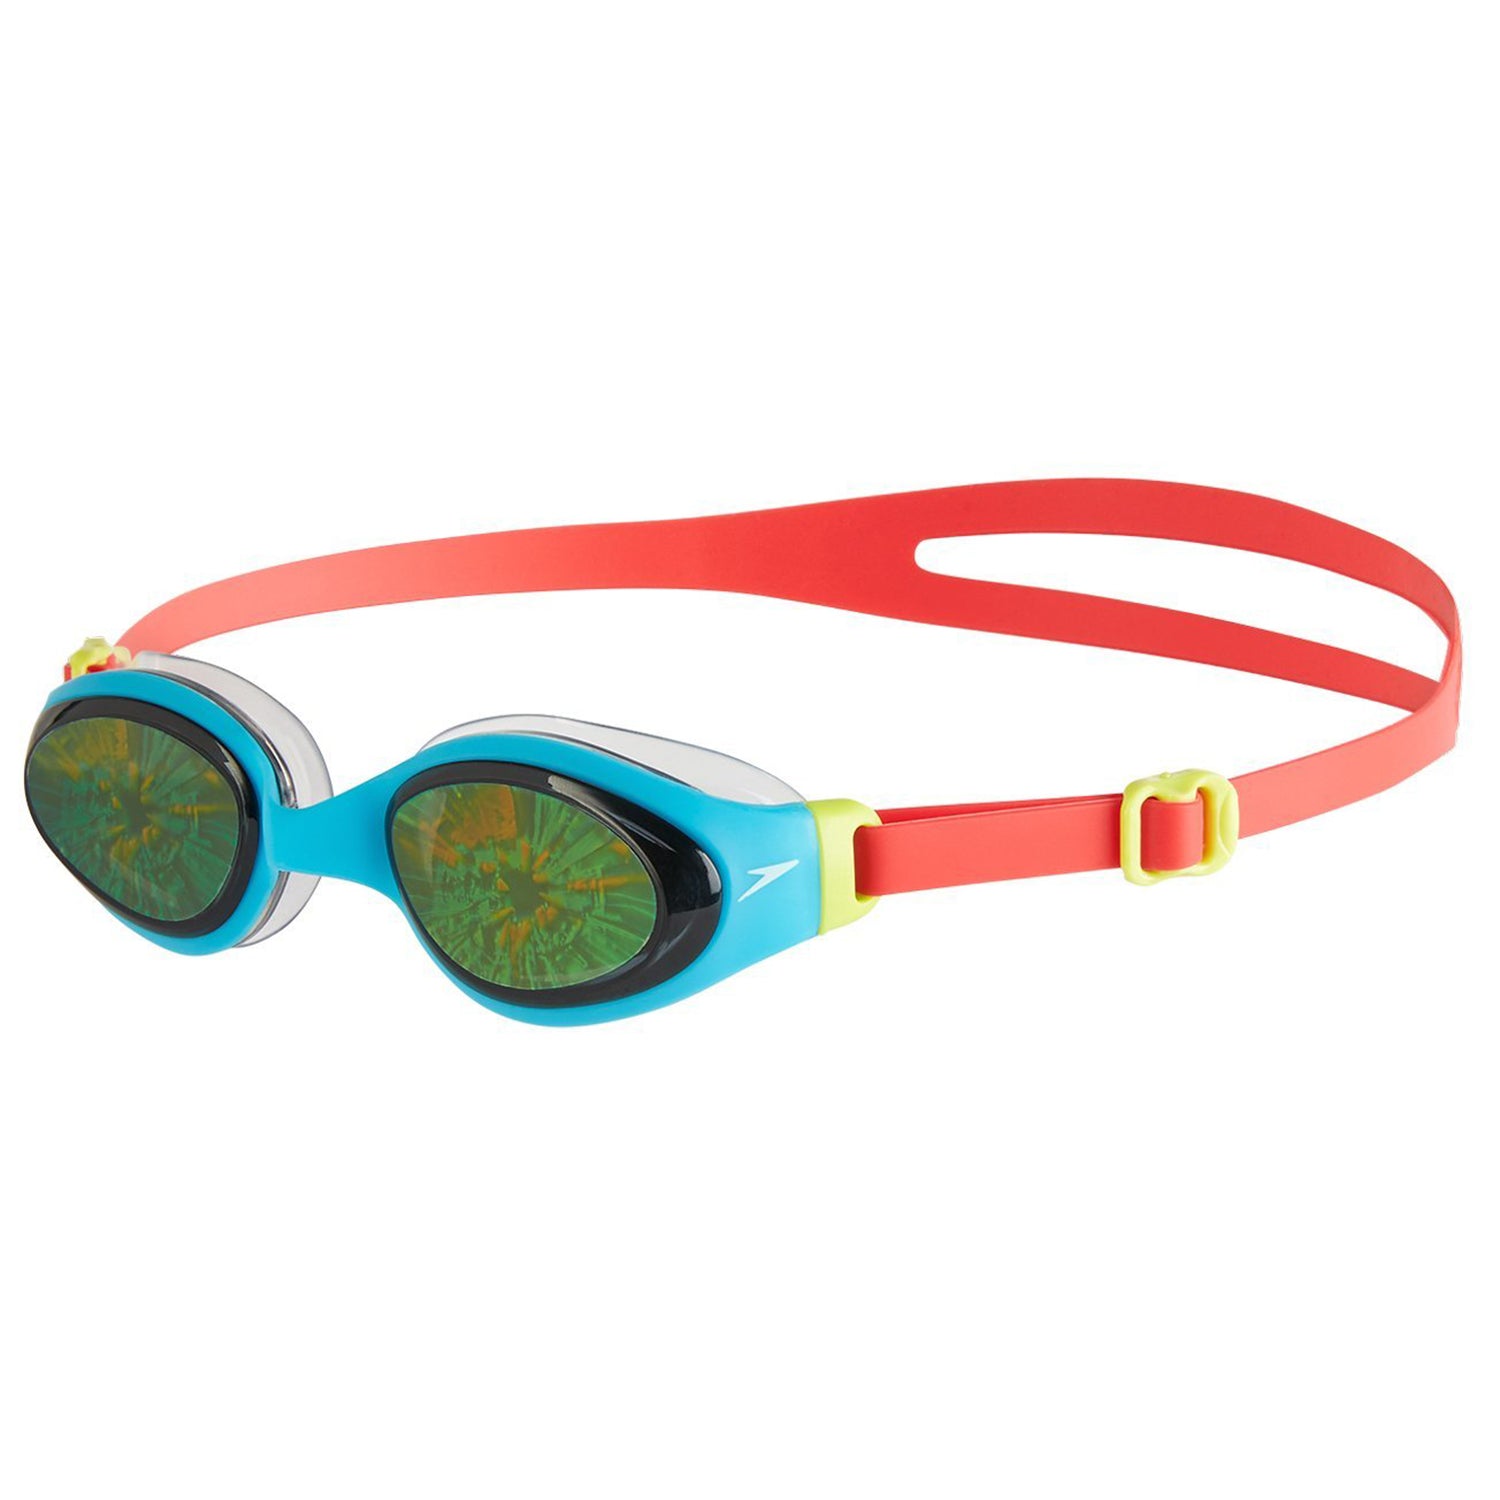 Speedo 810488B787 Blend Hollander Goggles (Red/Blue) - Best Price online Prokicksports.com